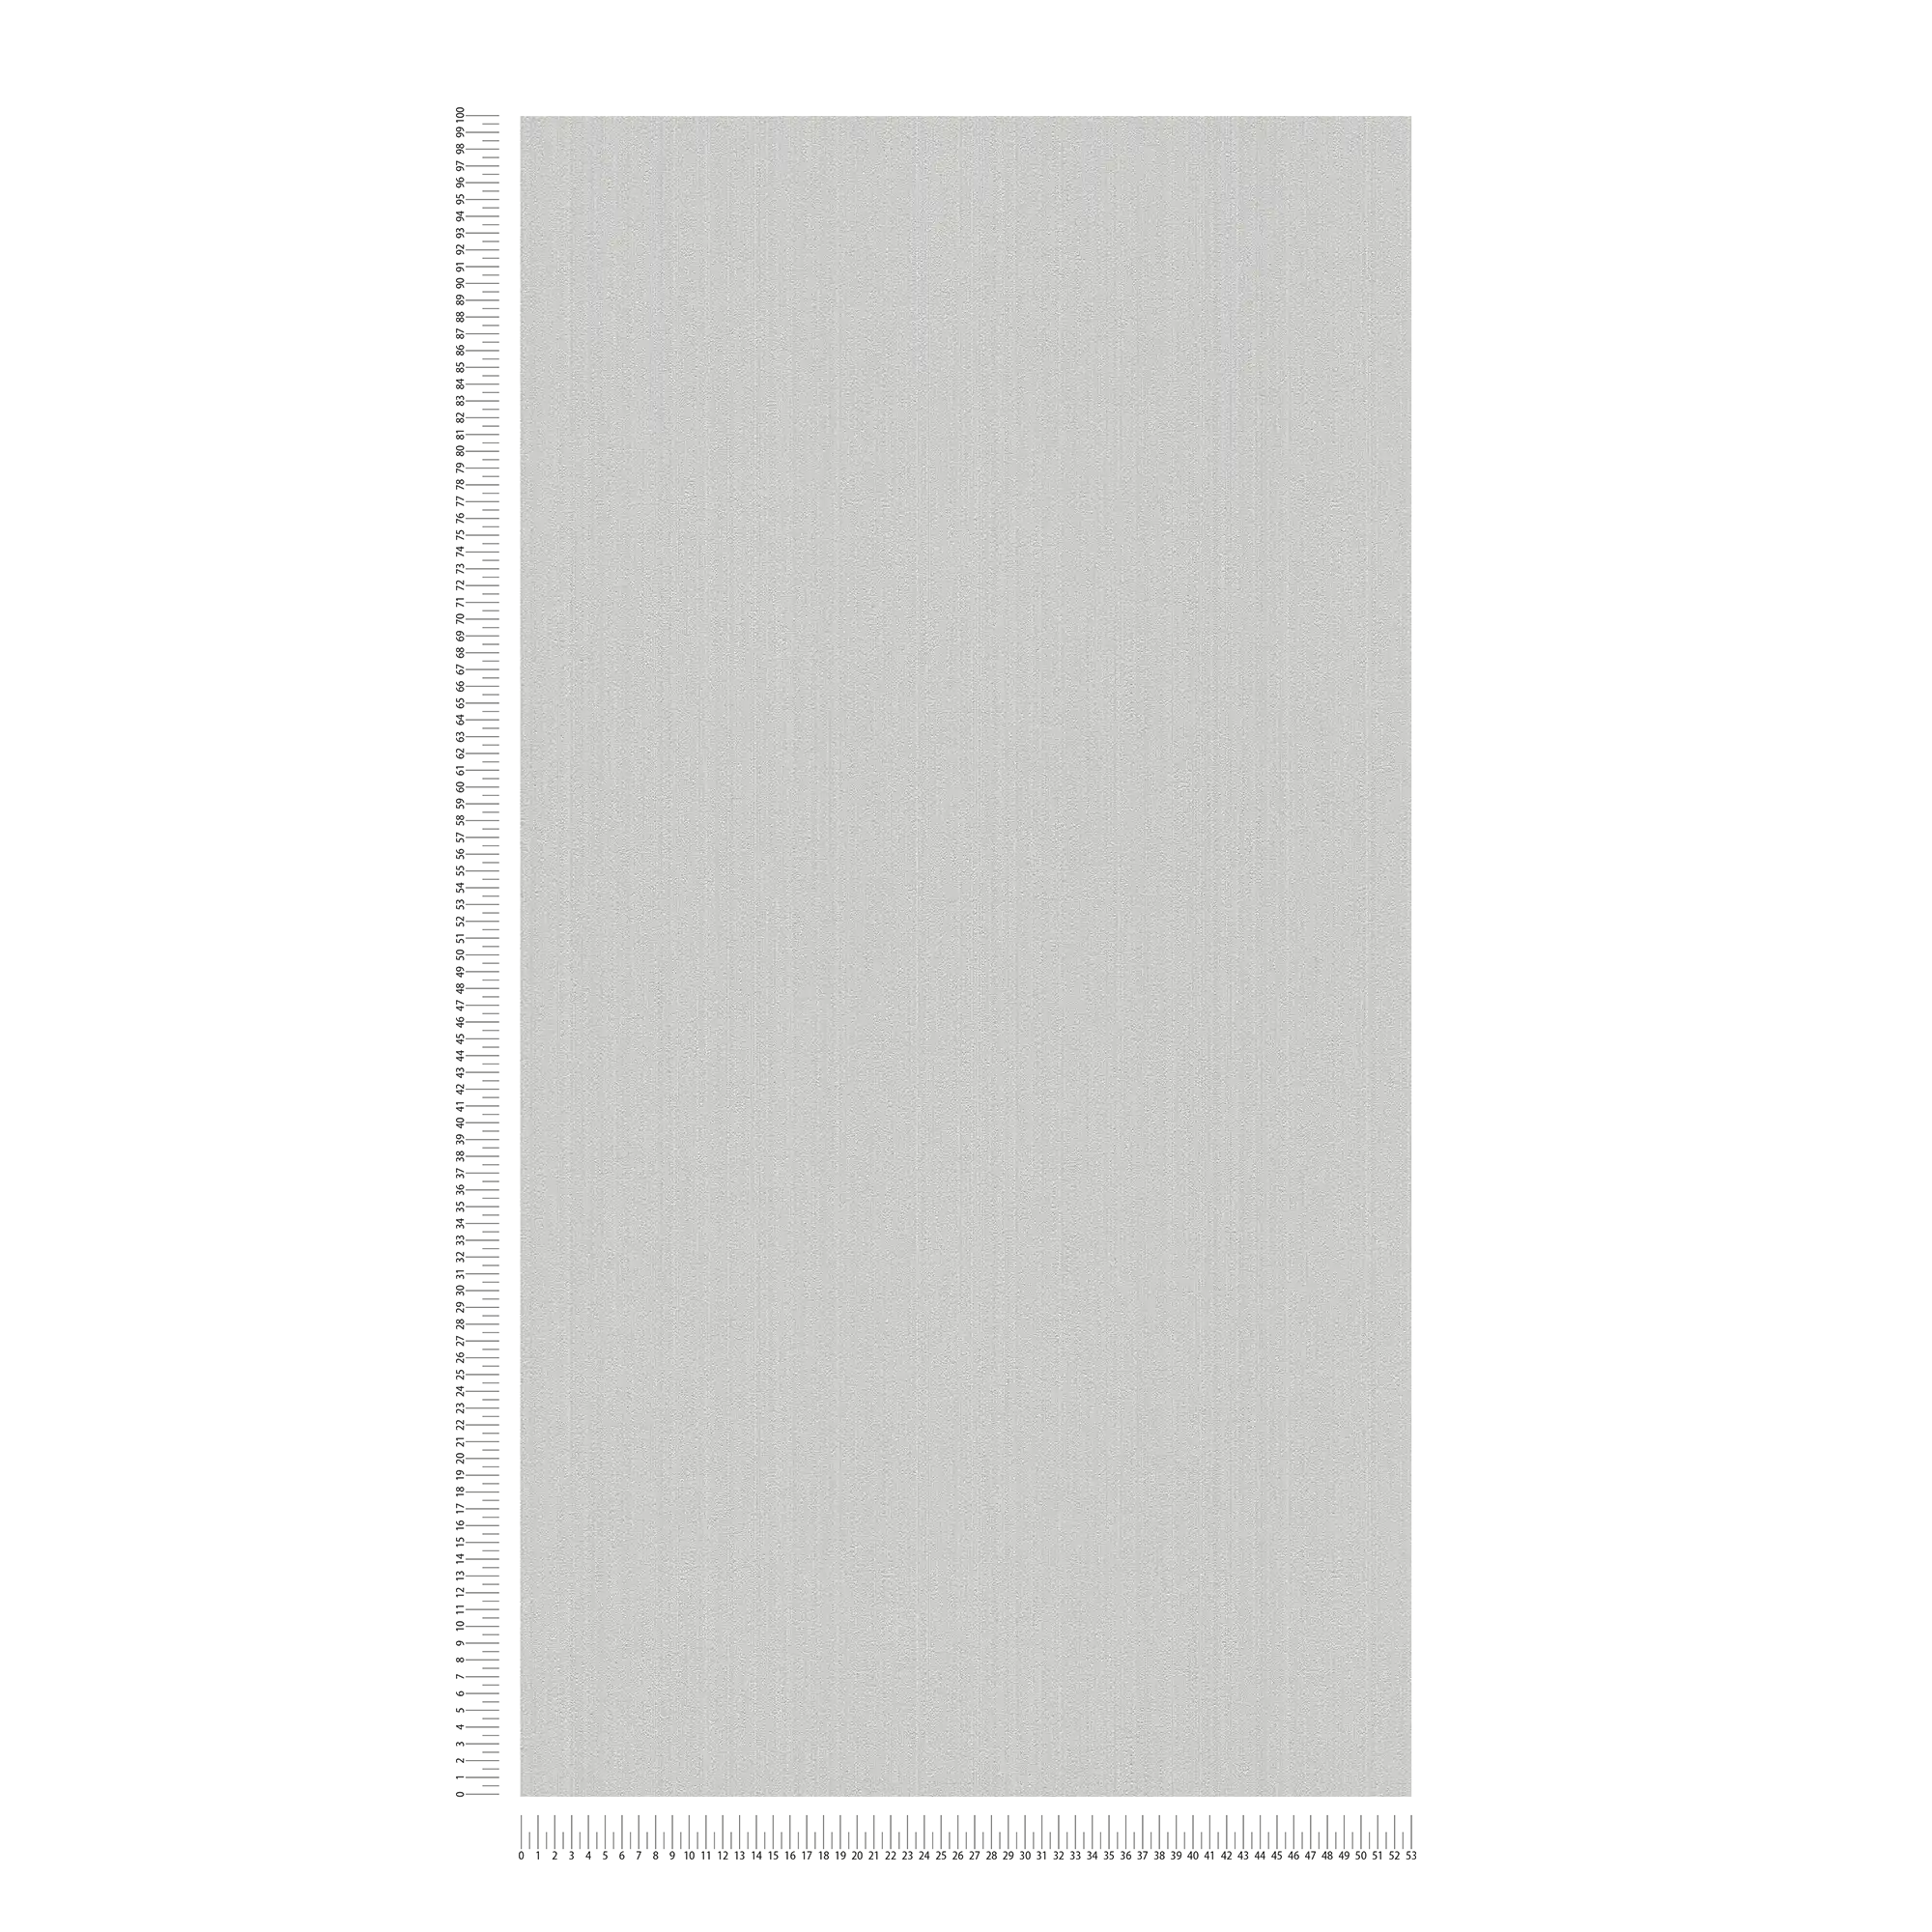             Carta da parati in tessuto non tessuto grigio chiaro con motivo Sturkut, tinta unita e seta opaca
        